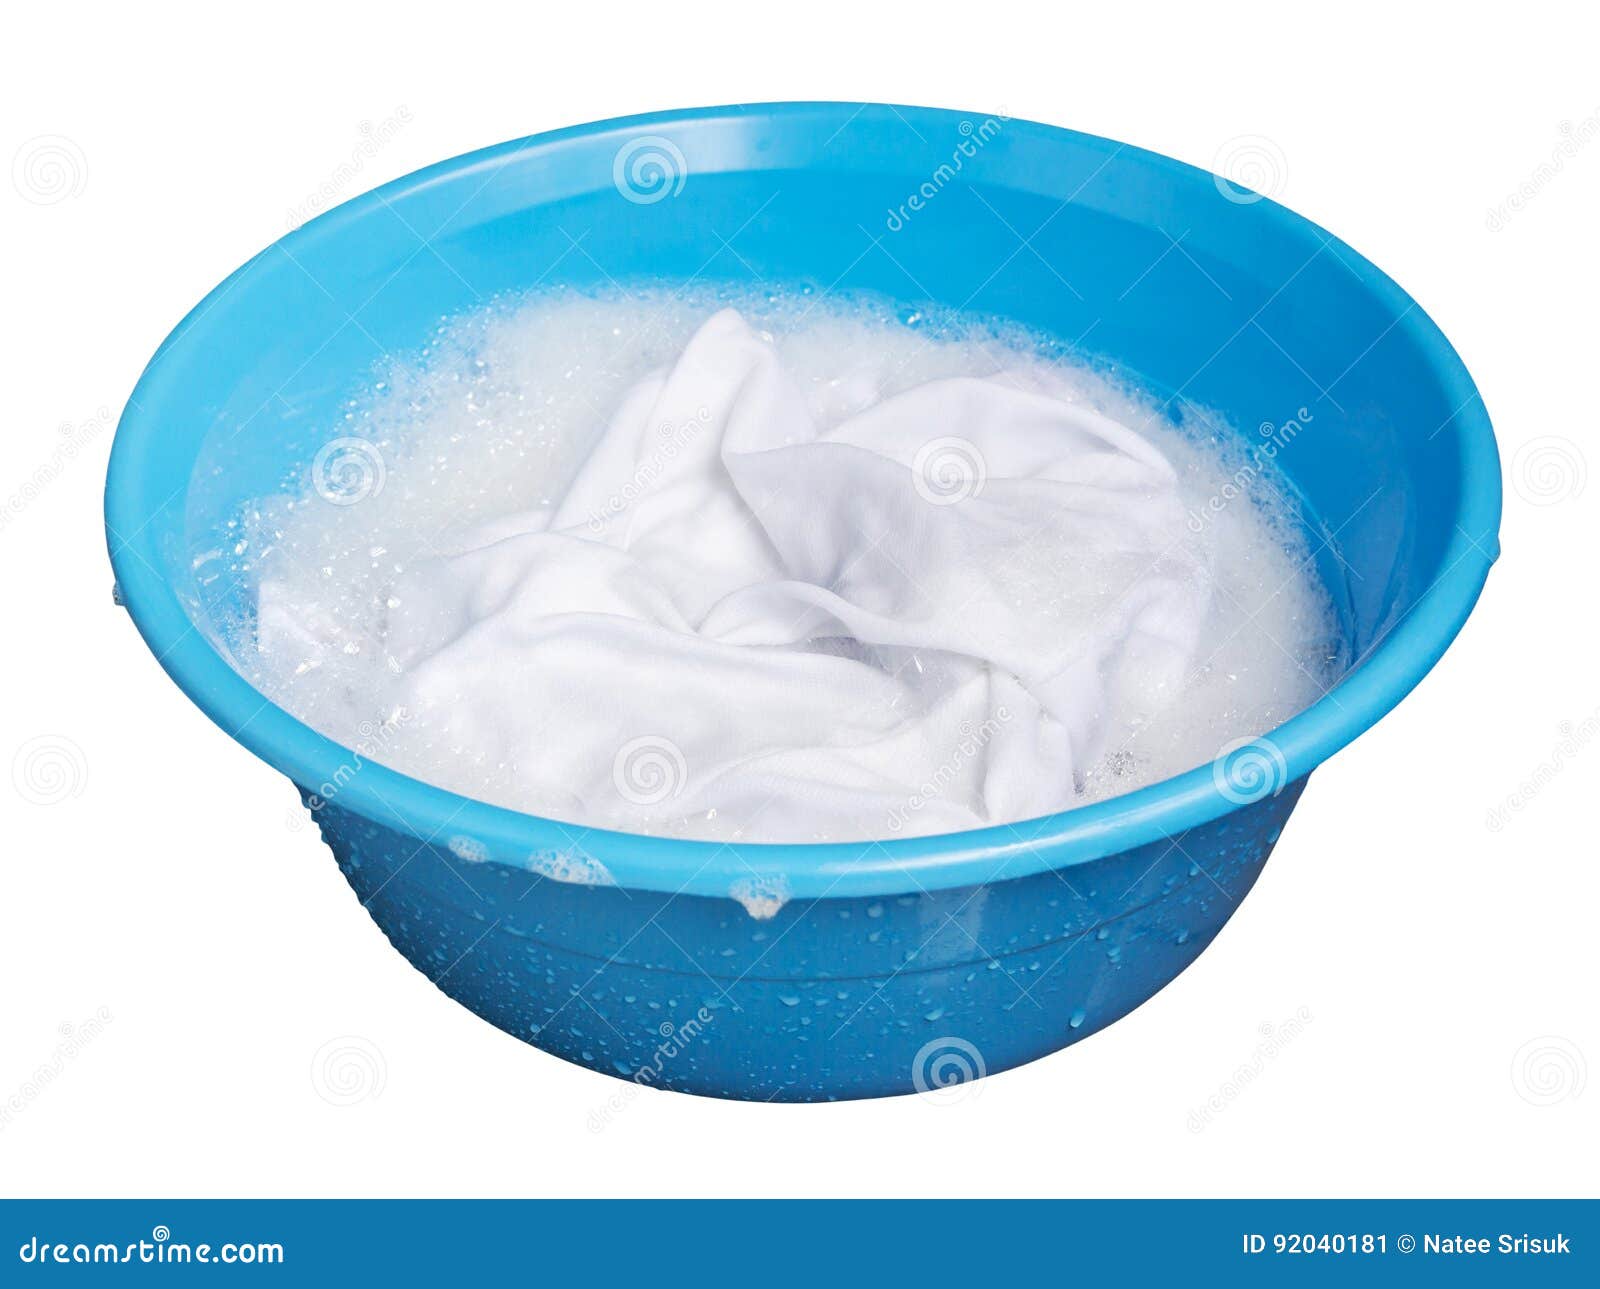 soak whites clothes in the enameled bowl on white background